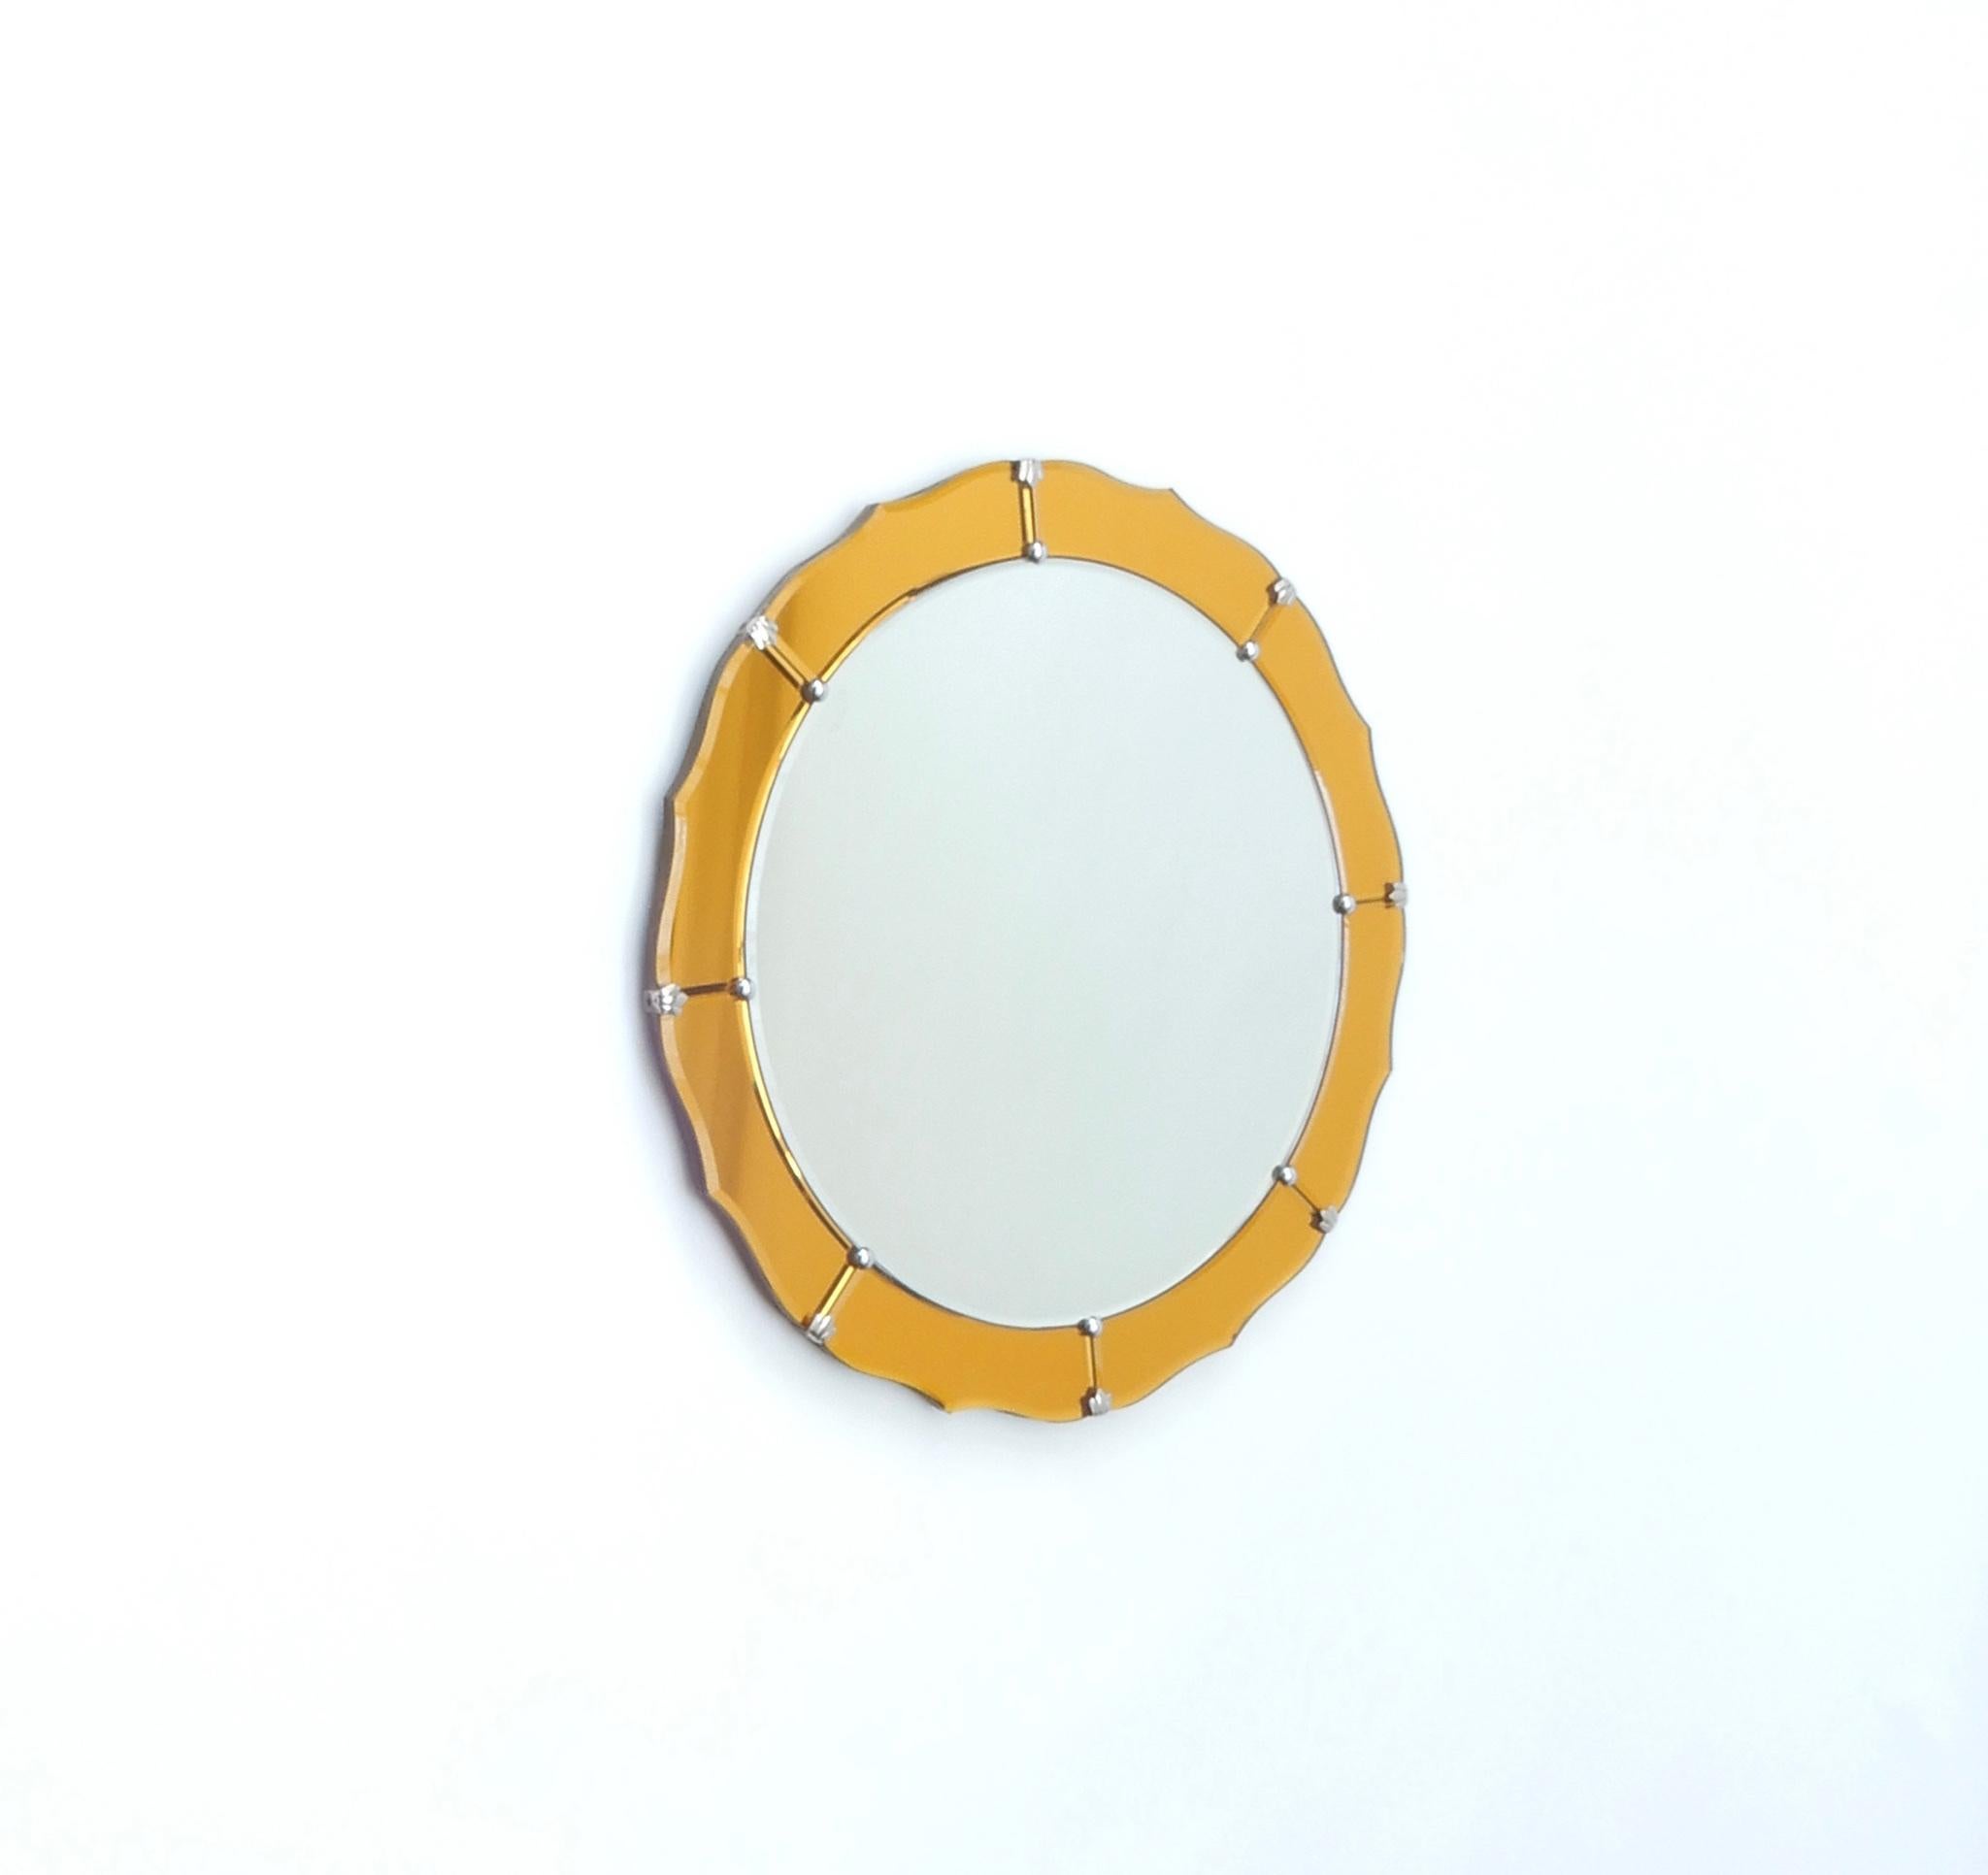 Midcentury round mirror with yellow orange frame.